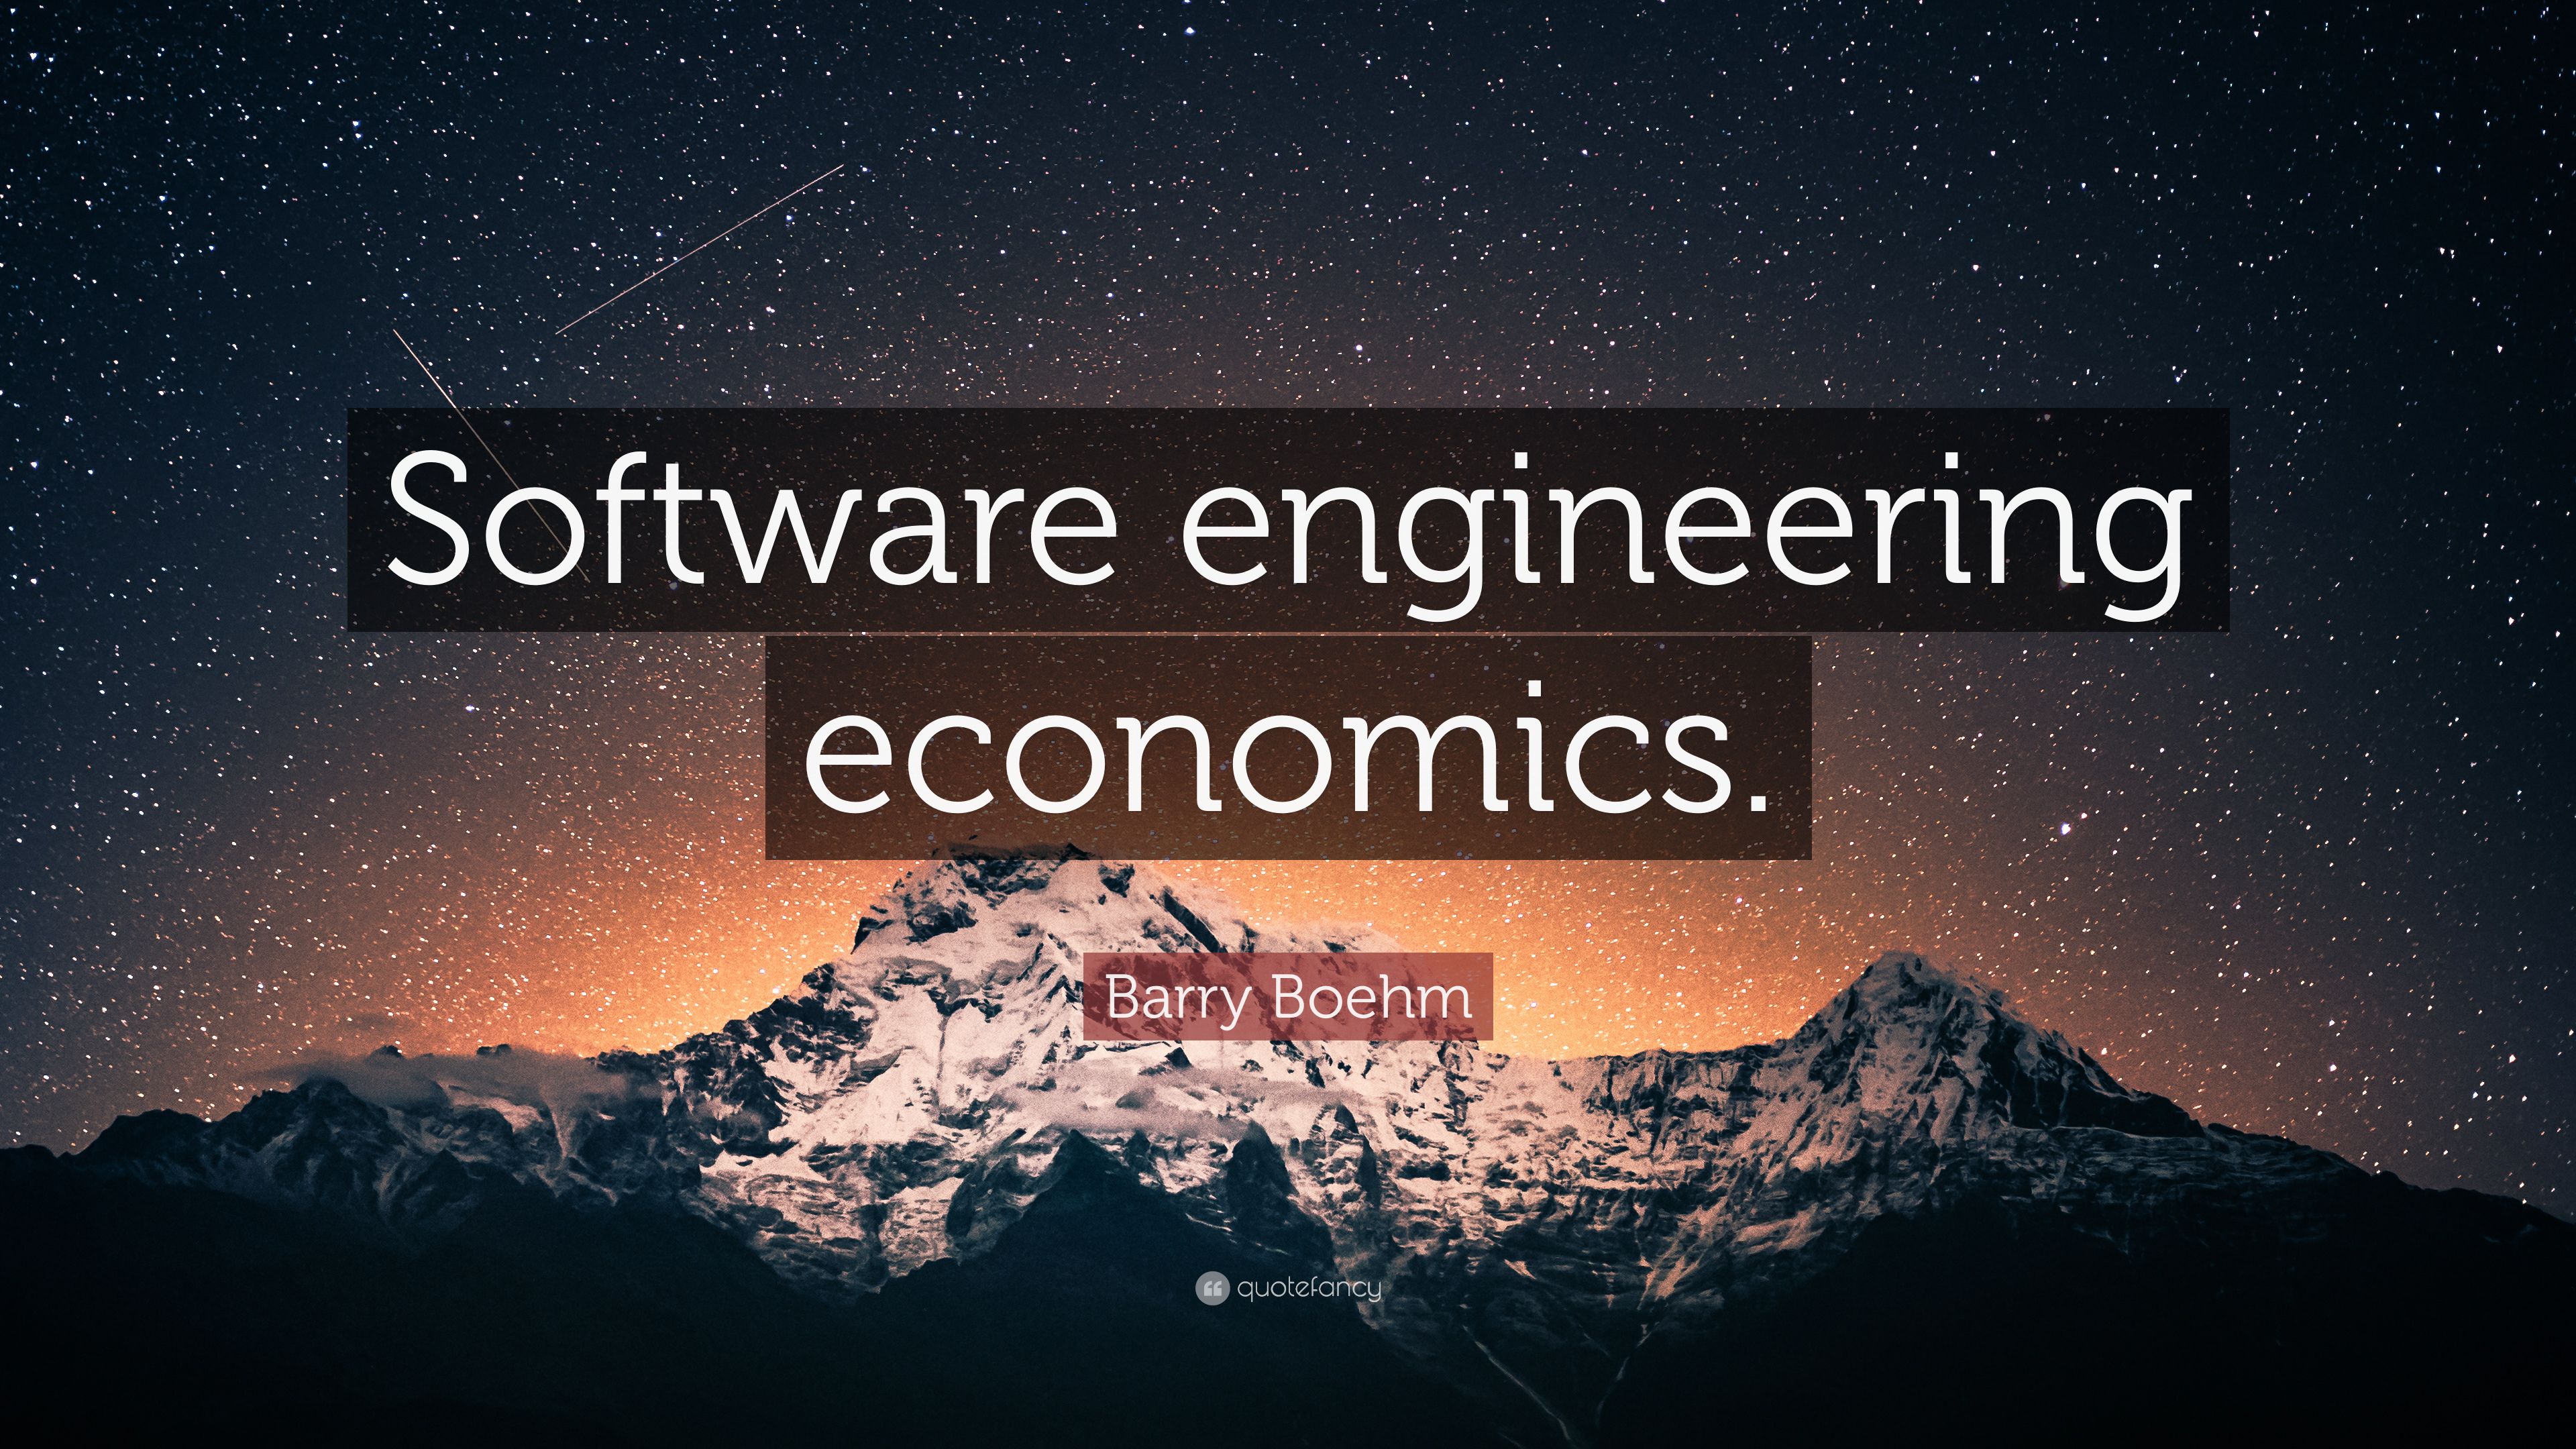 Barry Boehm Quote: “Software engineering economics.” 7 wallpaper